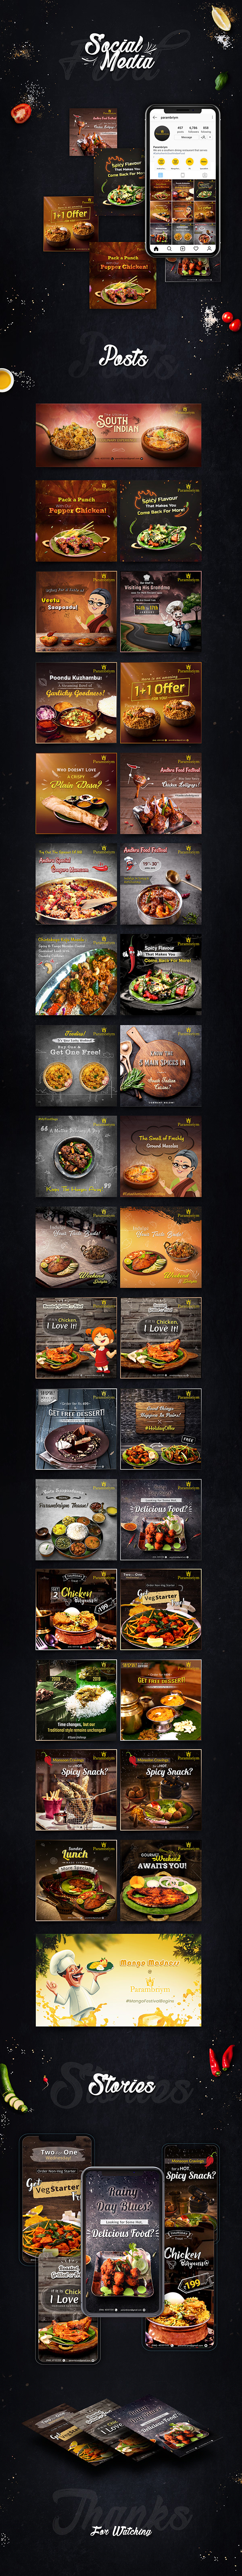 Food & Restaurant Social Media Banner Design .